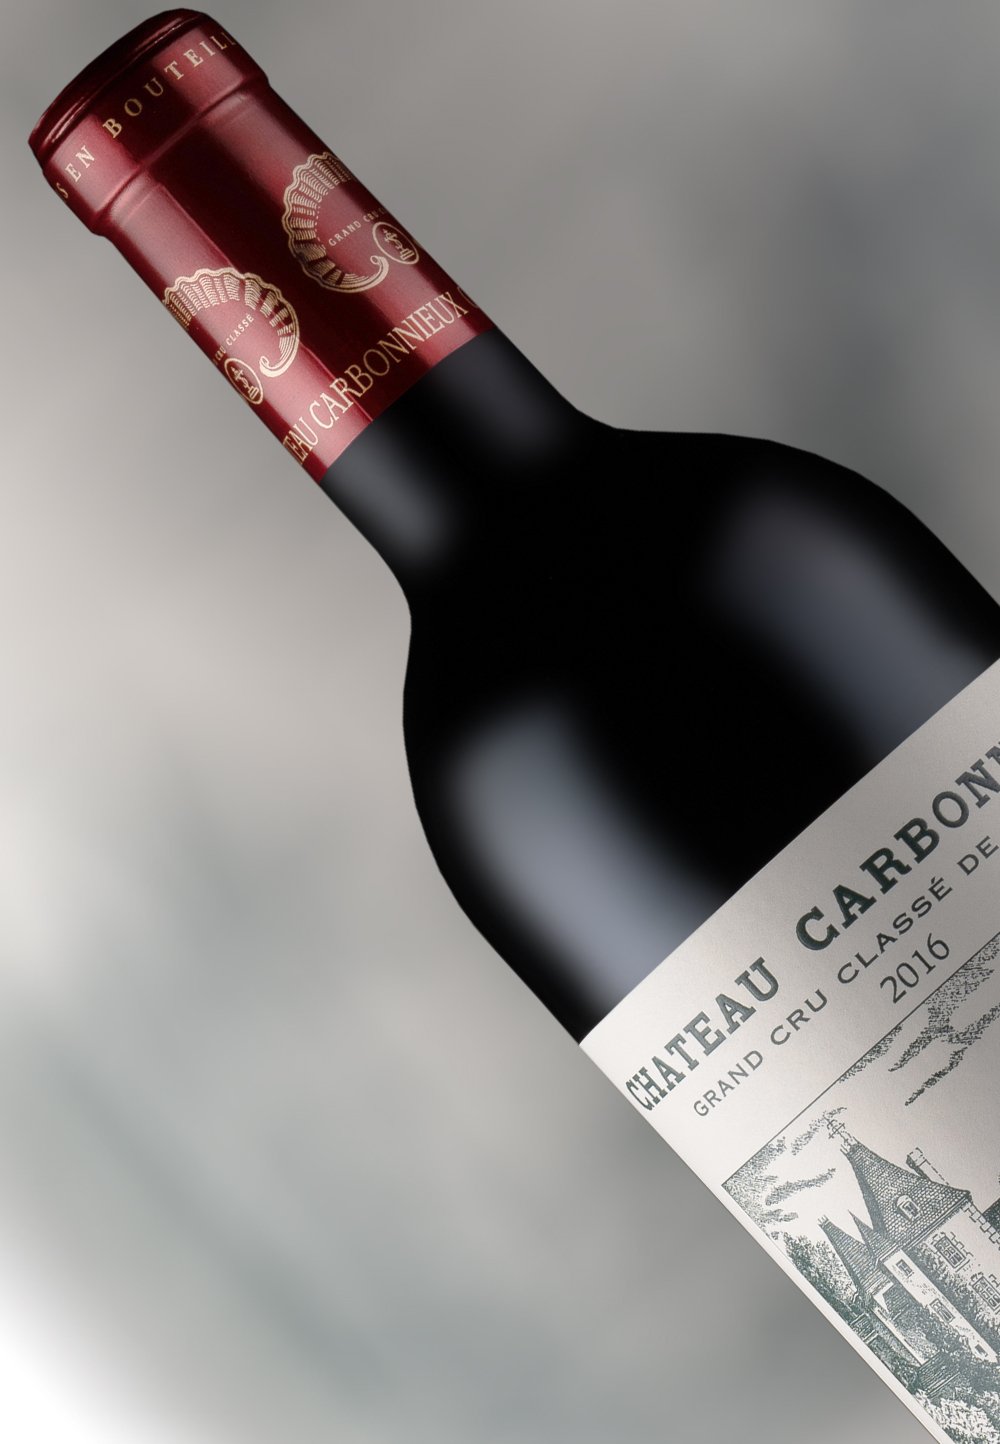 – Château 2015 Pessac-Léognan - Cru Weine Plaisir – Carbonnieux Grand Classé